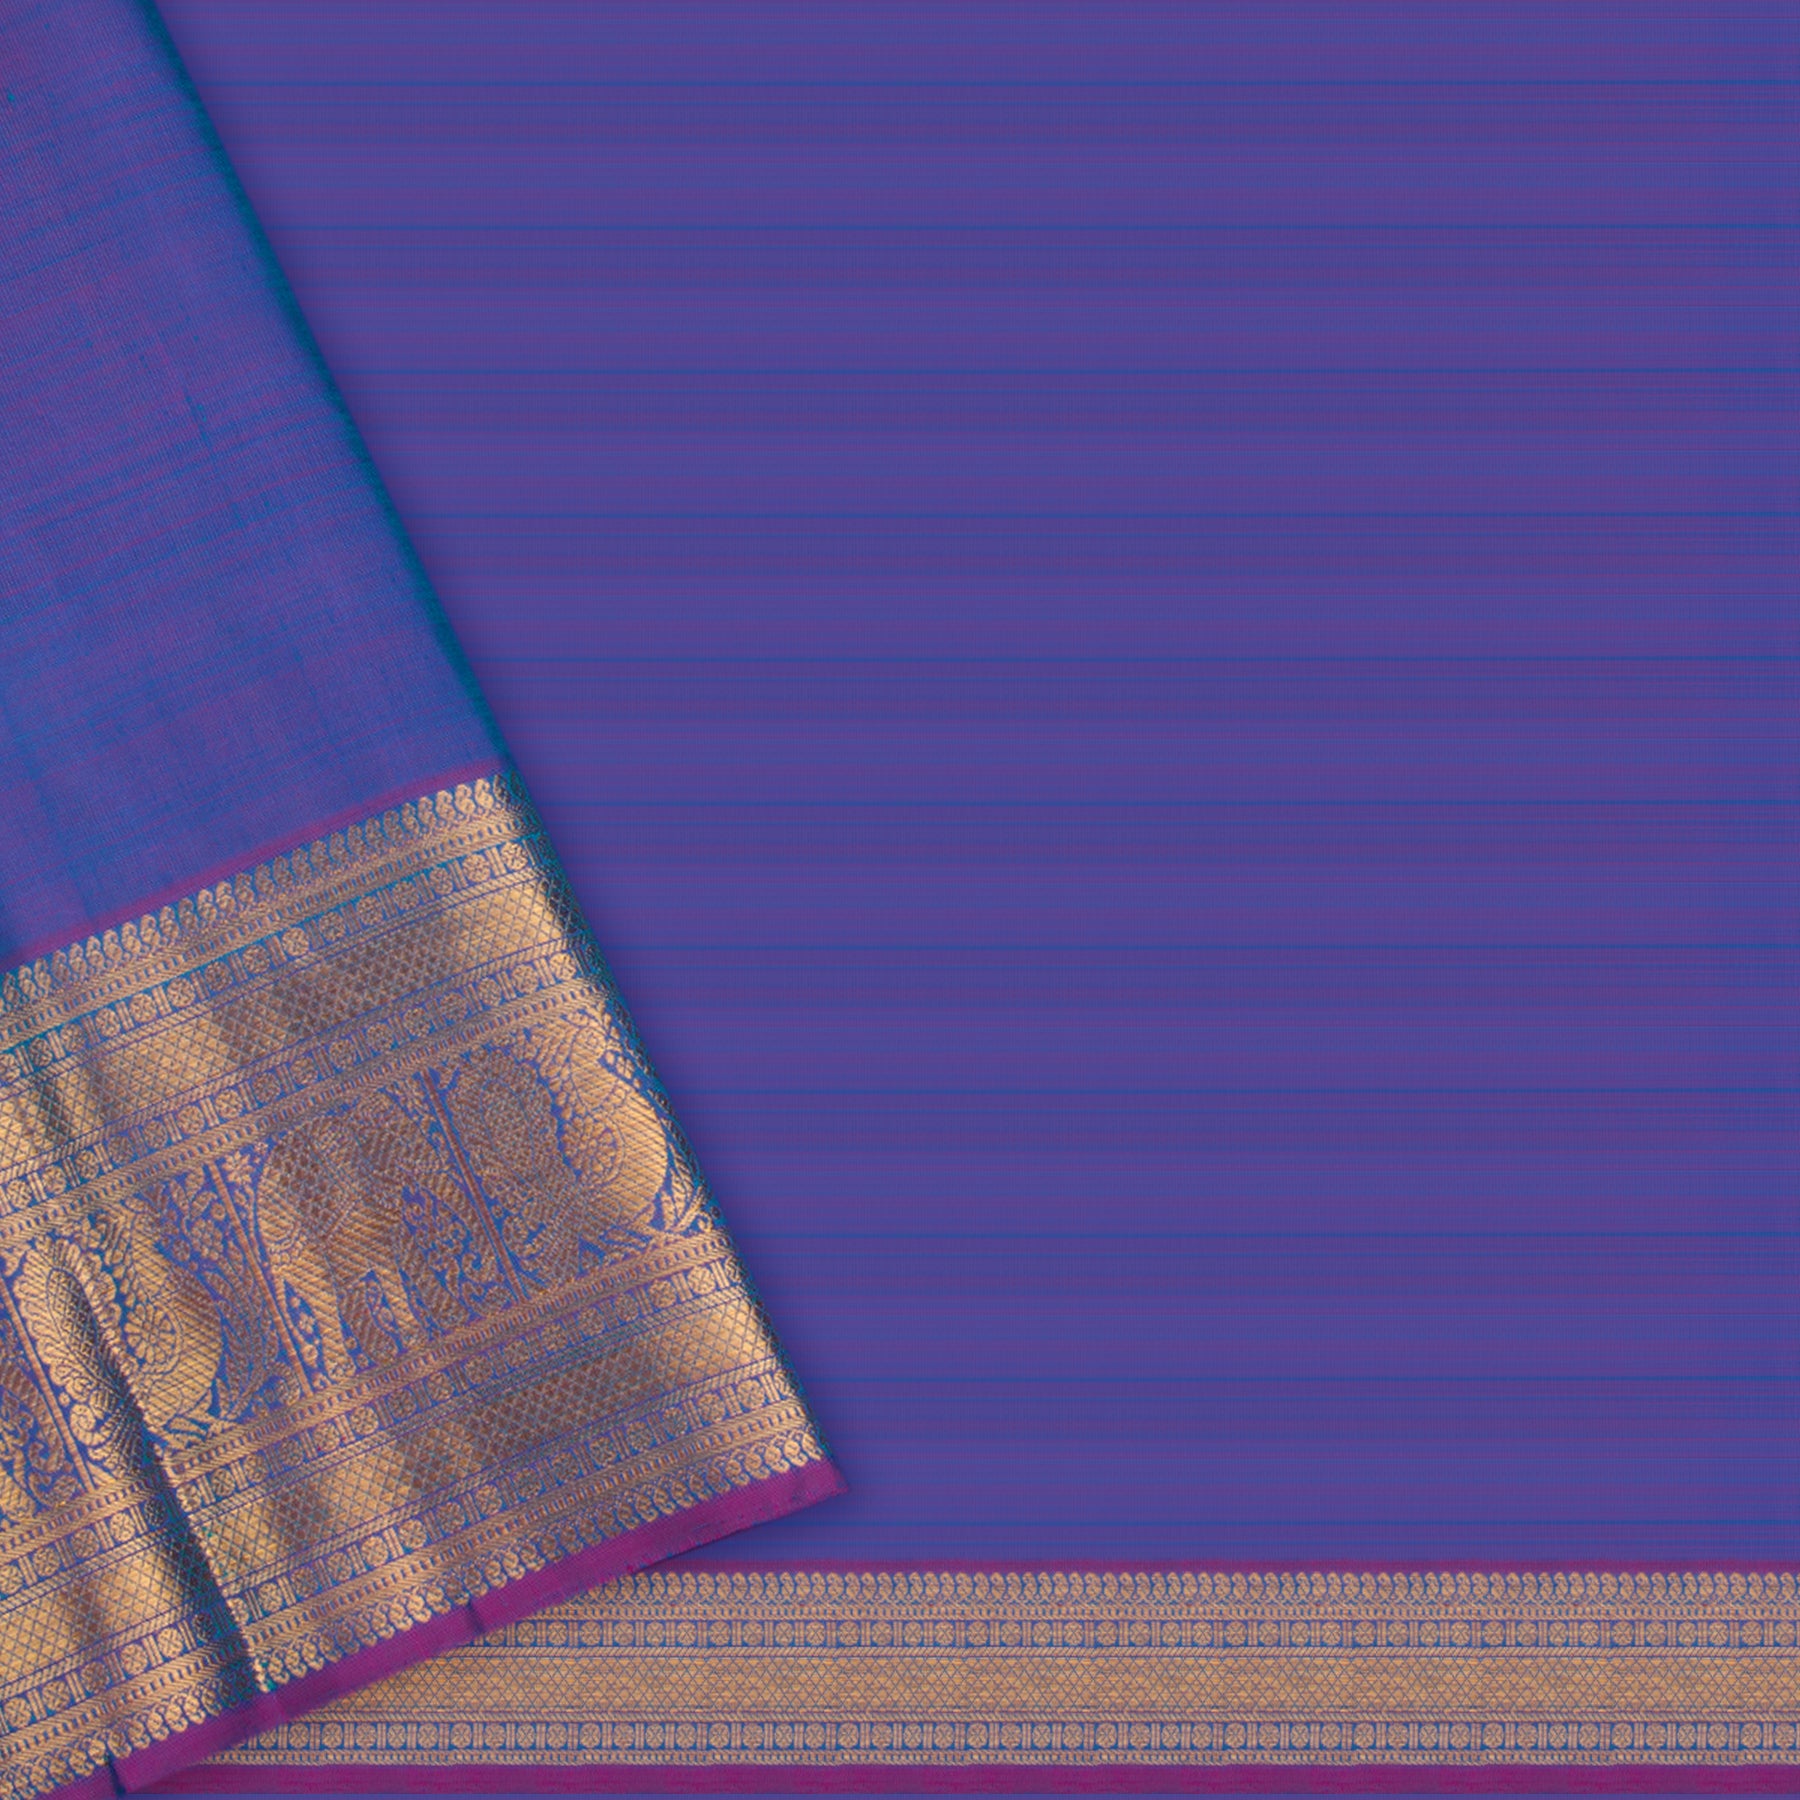 Kanakavalli Kanjivaram Silk Sari 23-599-HS001-11233 - Blouse View